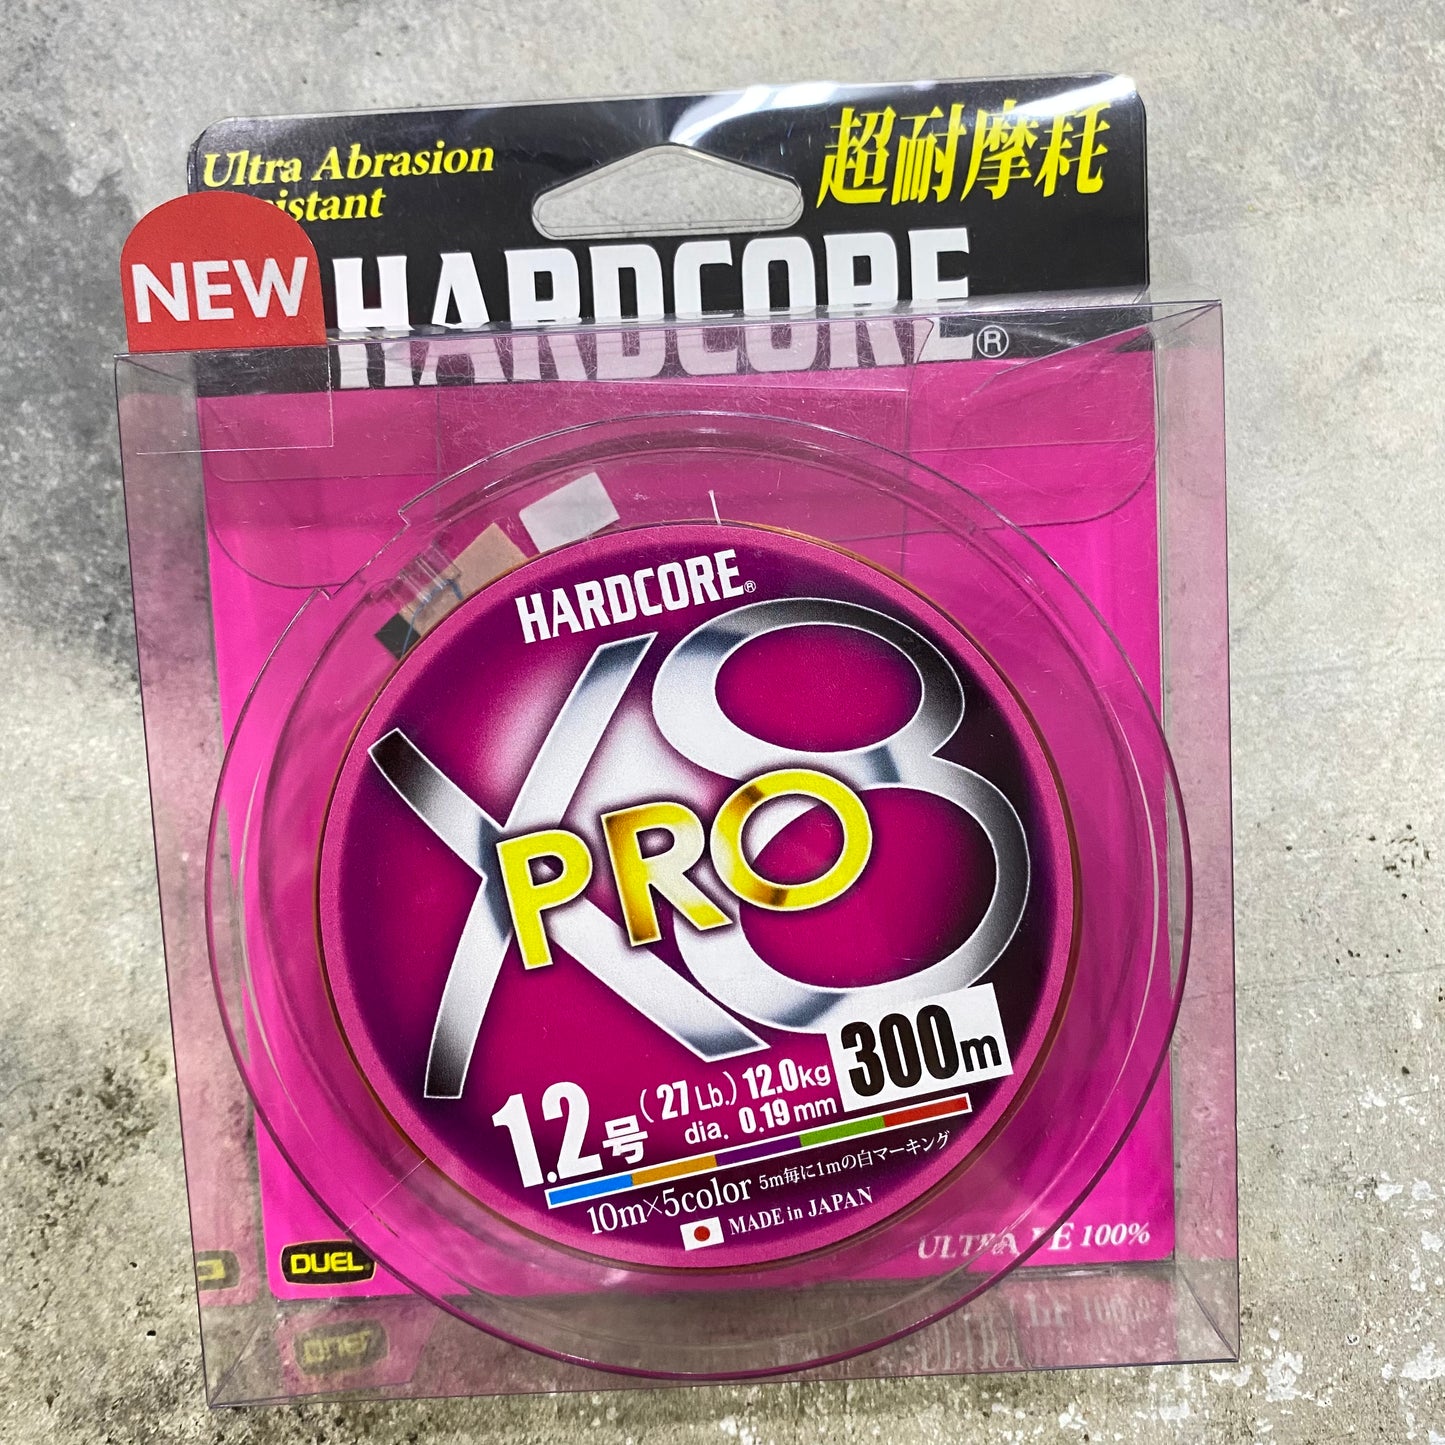 Hardcore x8 Pro